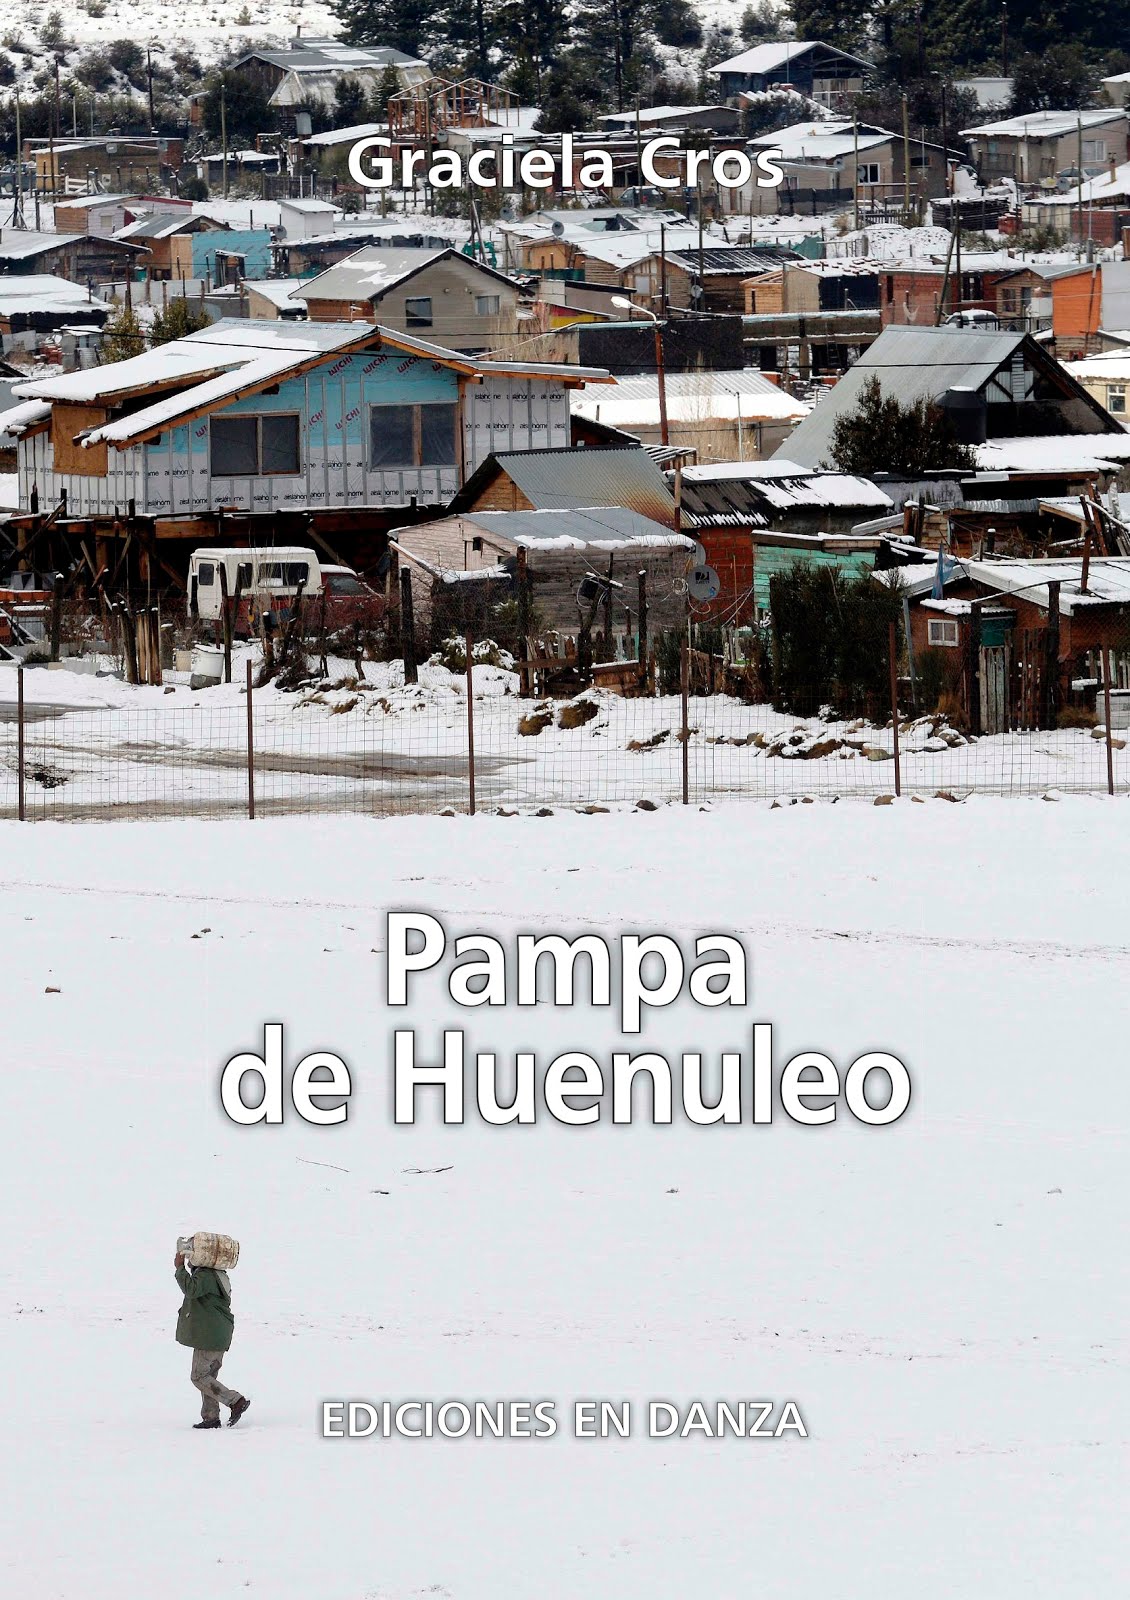 "Pampa de Huenuleo"